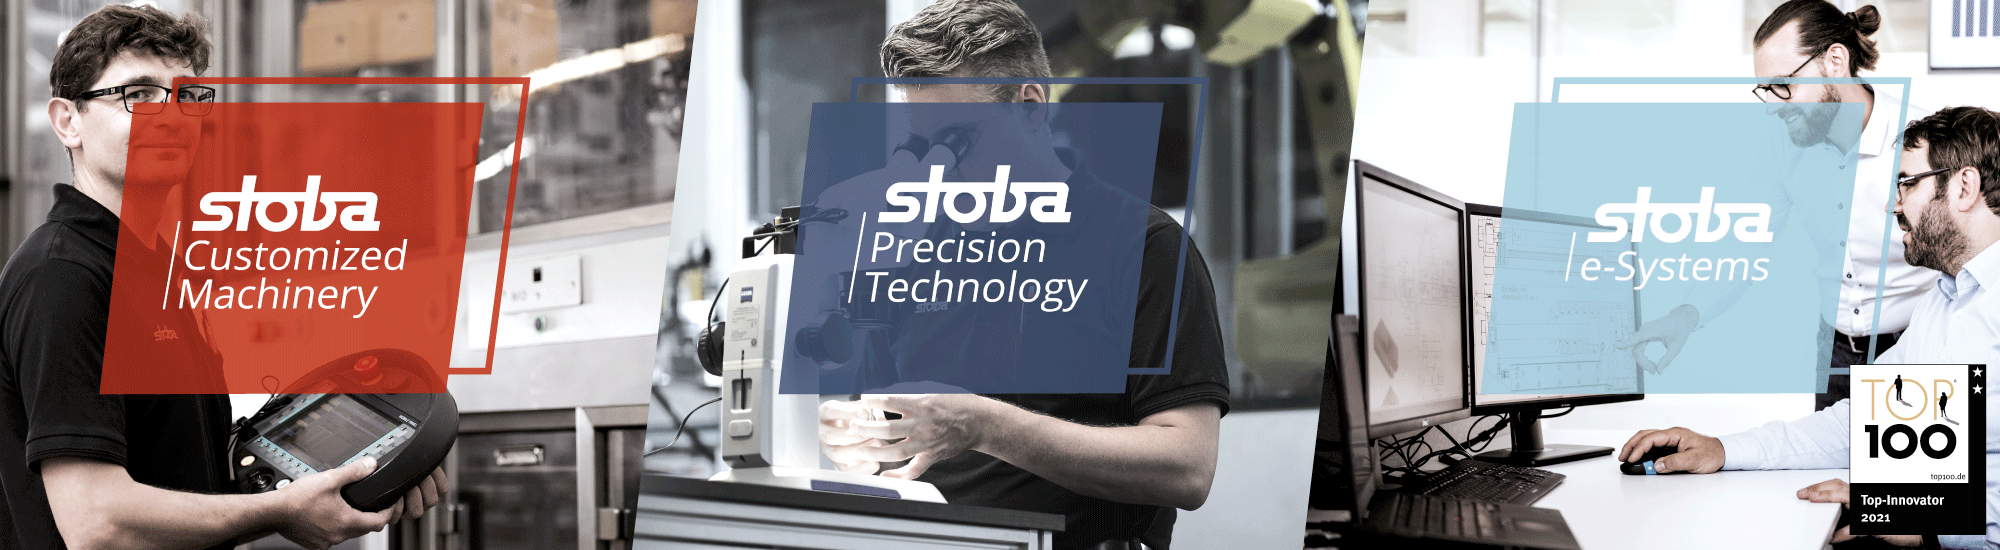 stoba Customized Machinery